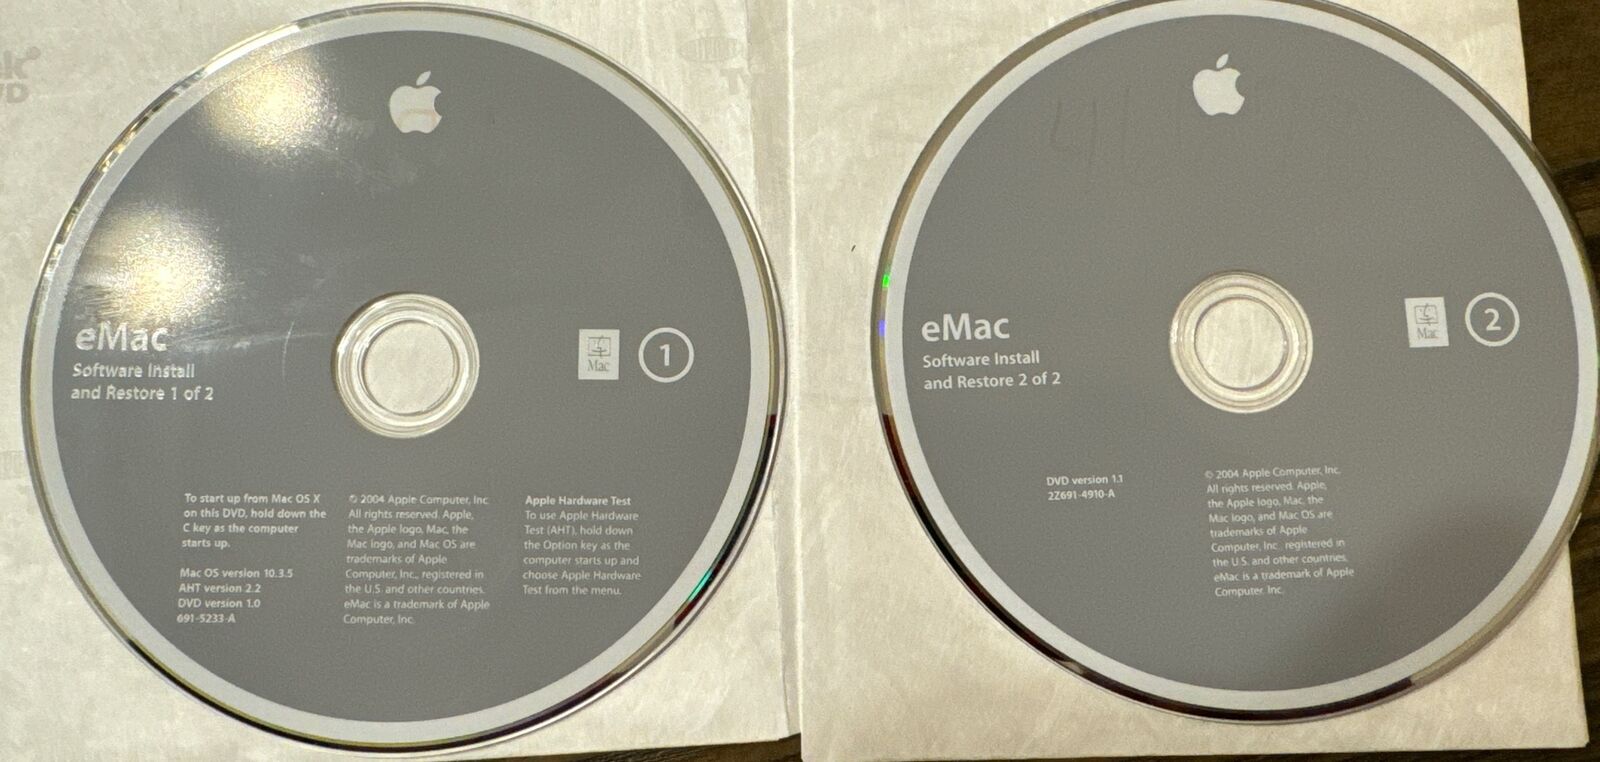 Apple iMac G5 Install Disc 1 & 2 OS 10.3.5 Computer 2004